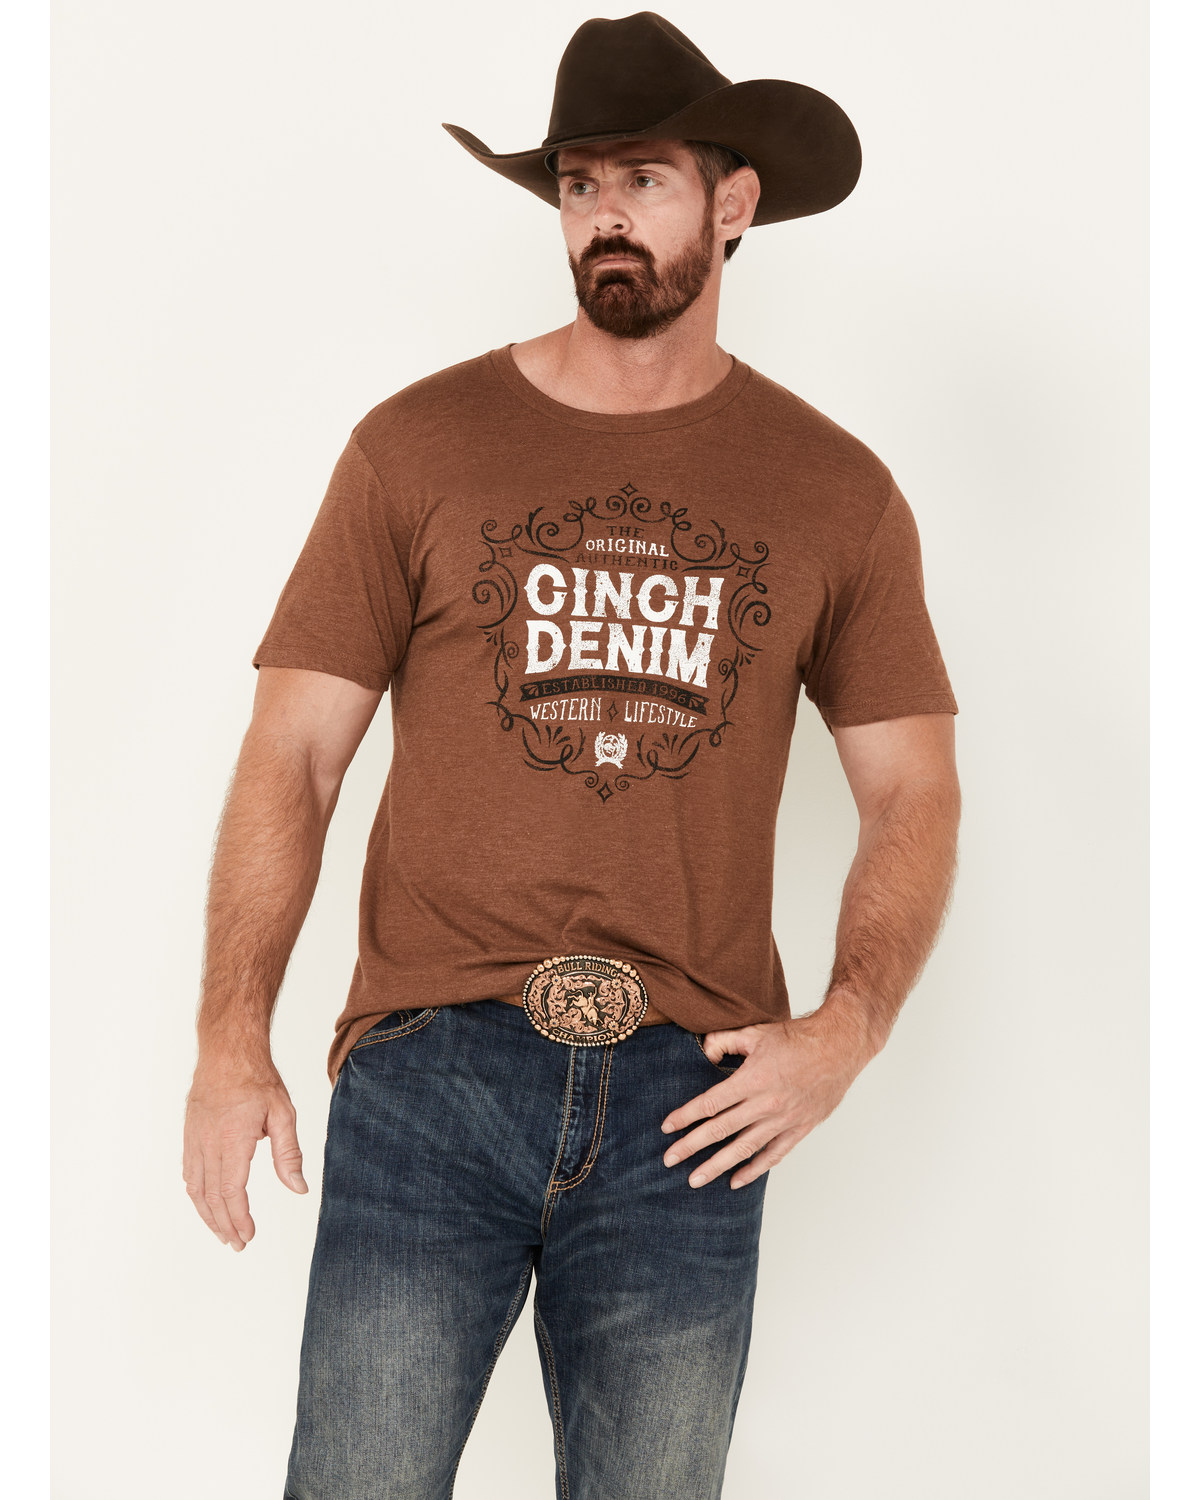 Cinch Men's Denim Western Lifestyle Short Sleeve Graphic T-Shirt